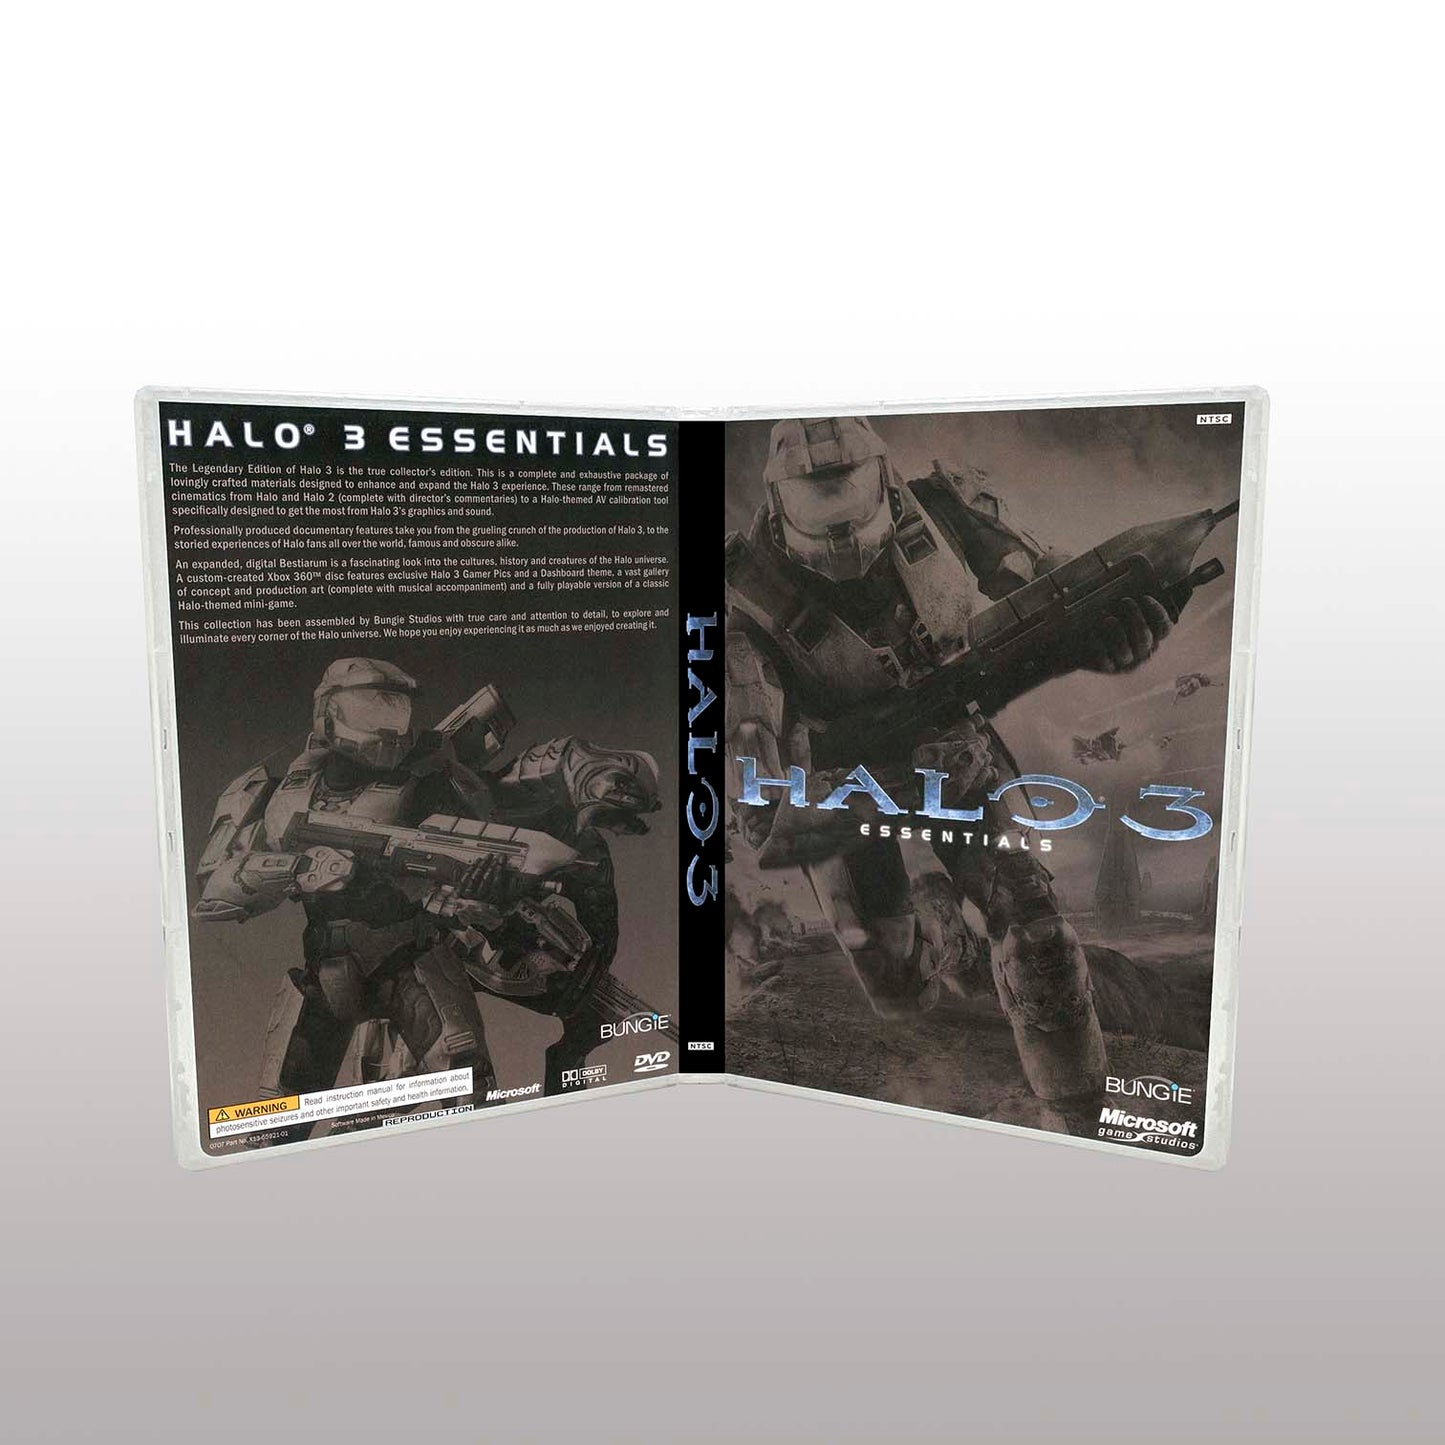 Xbox 360 - NO GAME - Halo 3 Essentials [2 Disc]